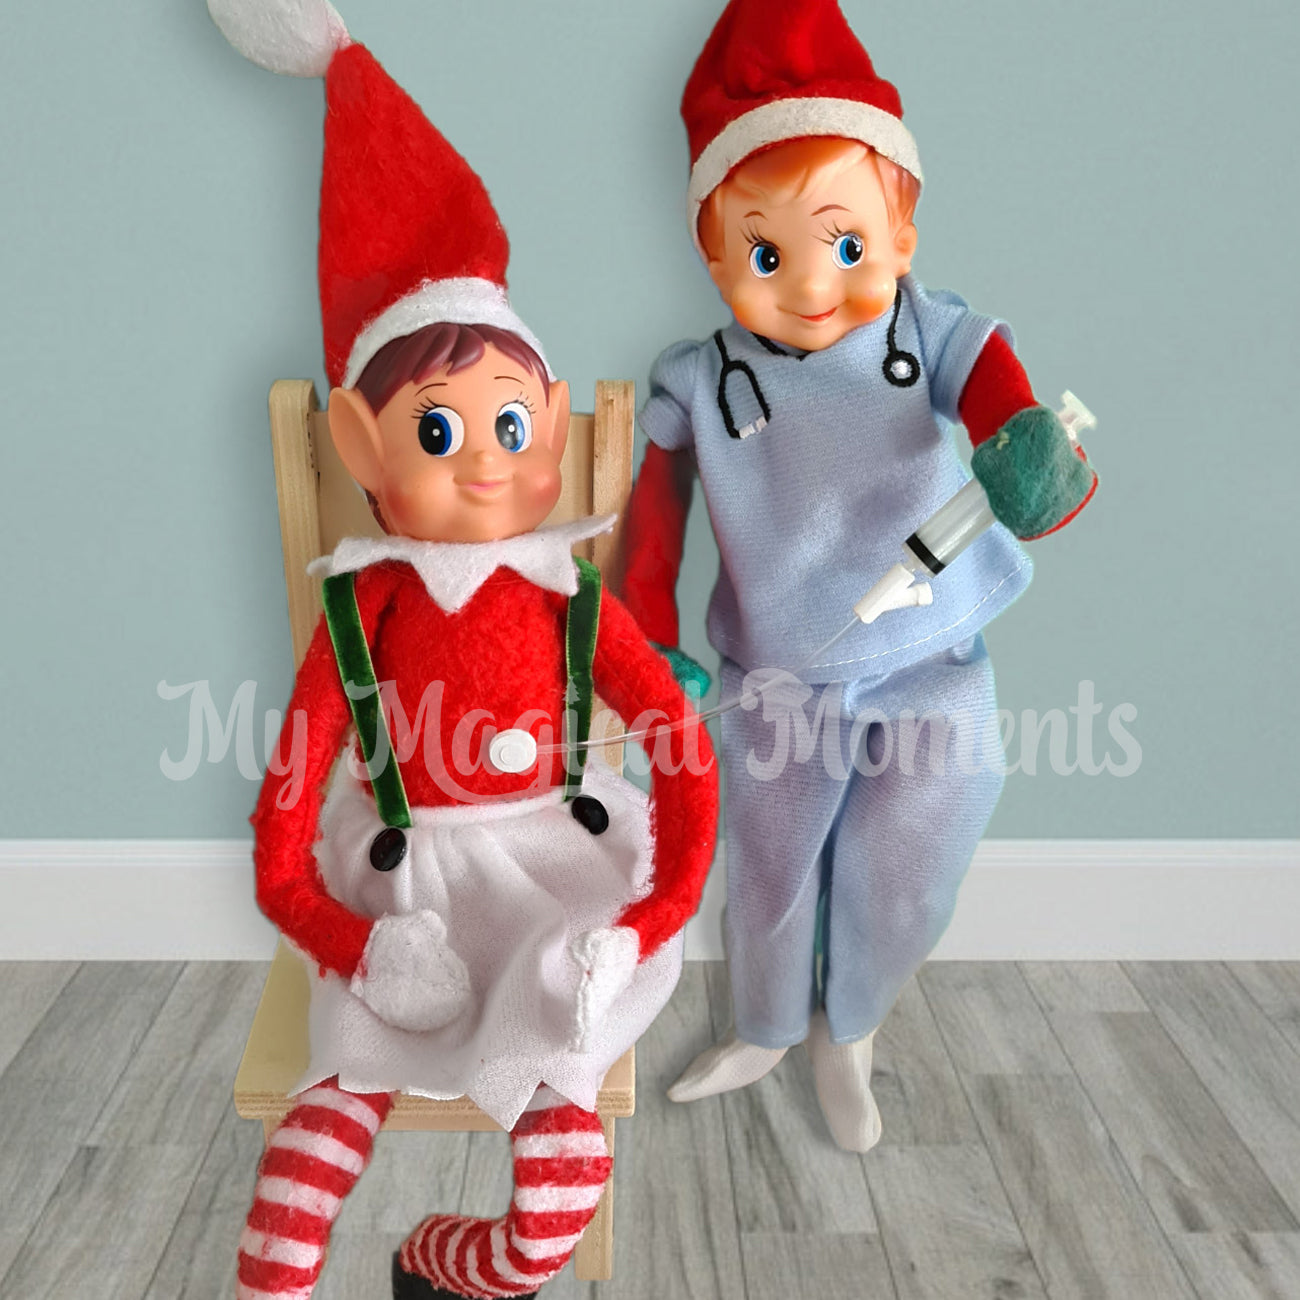 Elf dressed as a nurse using a miniature feeding apparatus on an elves behavin badly girl elf